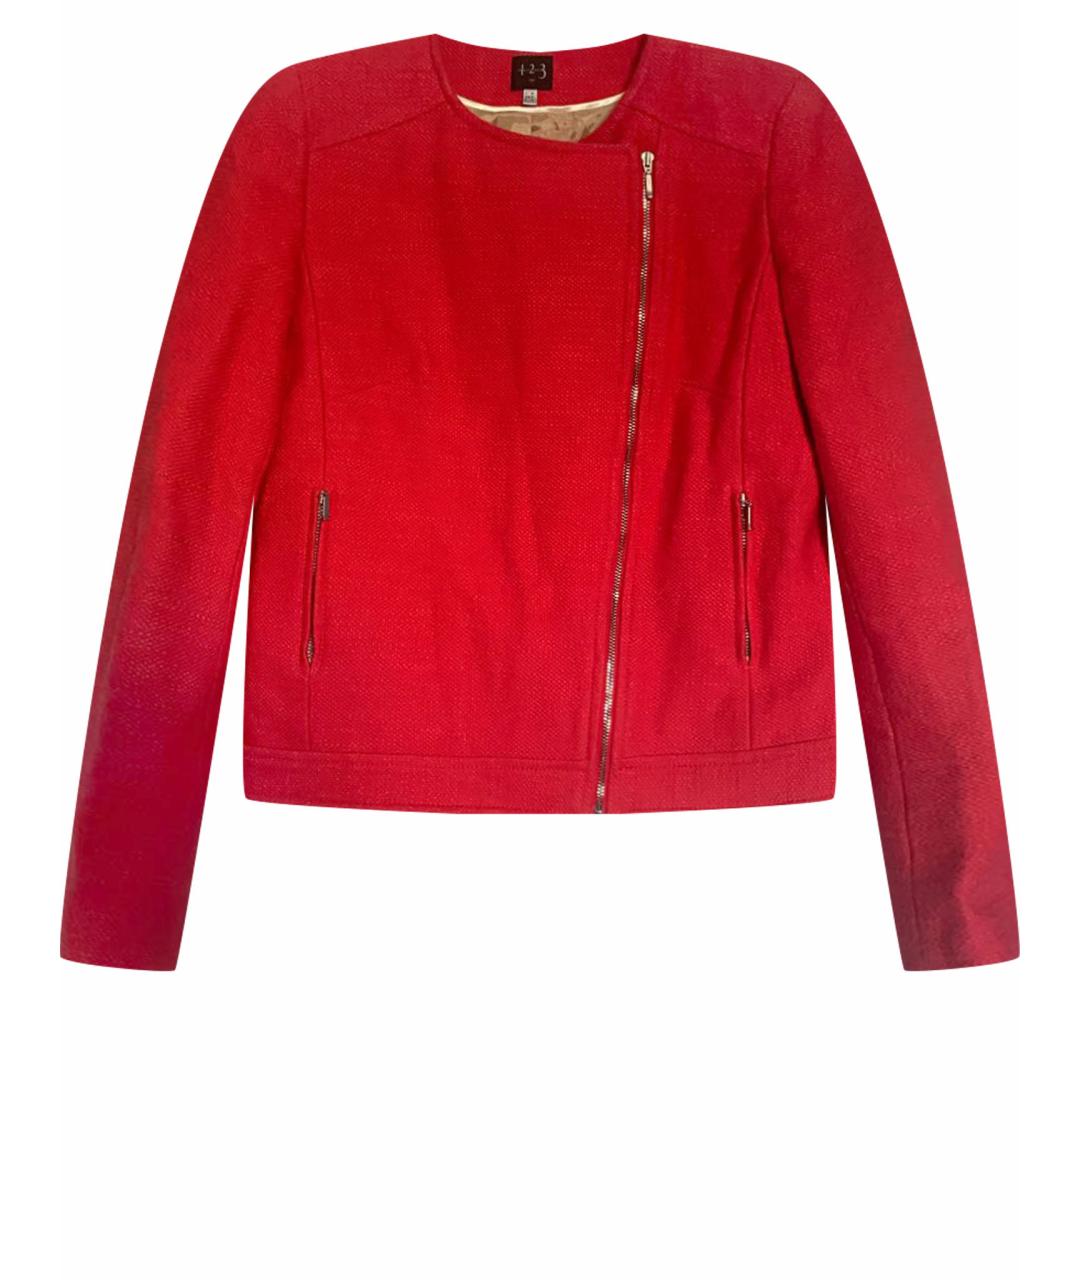 123 Красная хлопковая куртка, фото 1